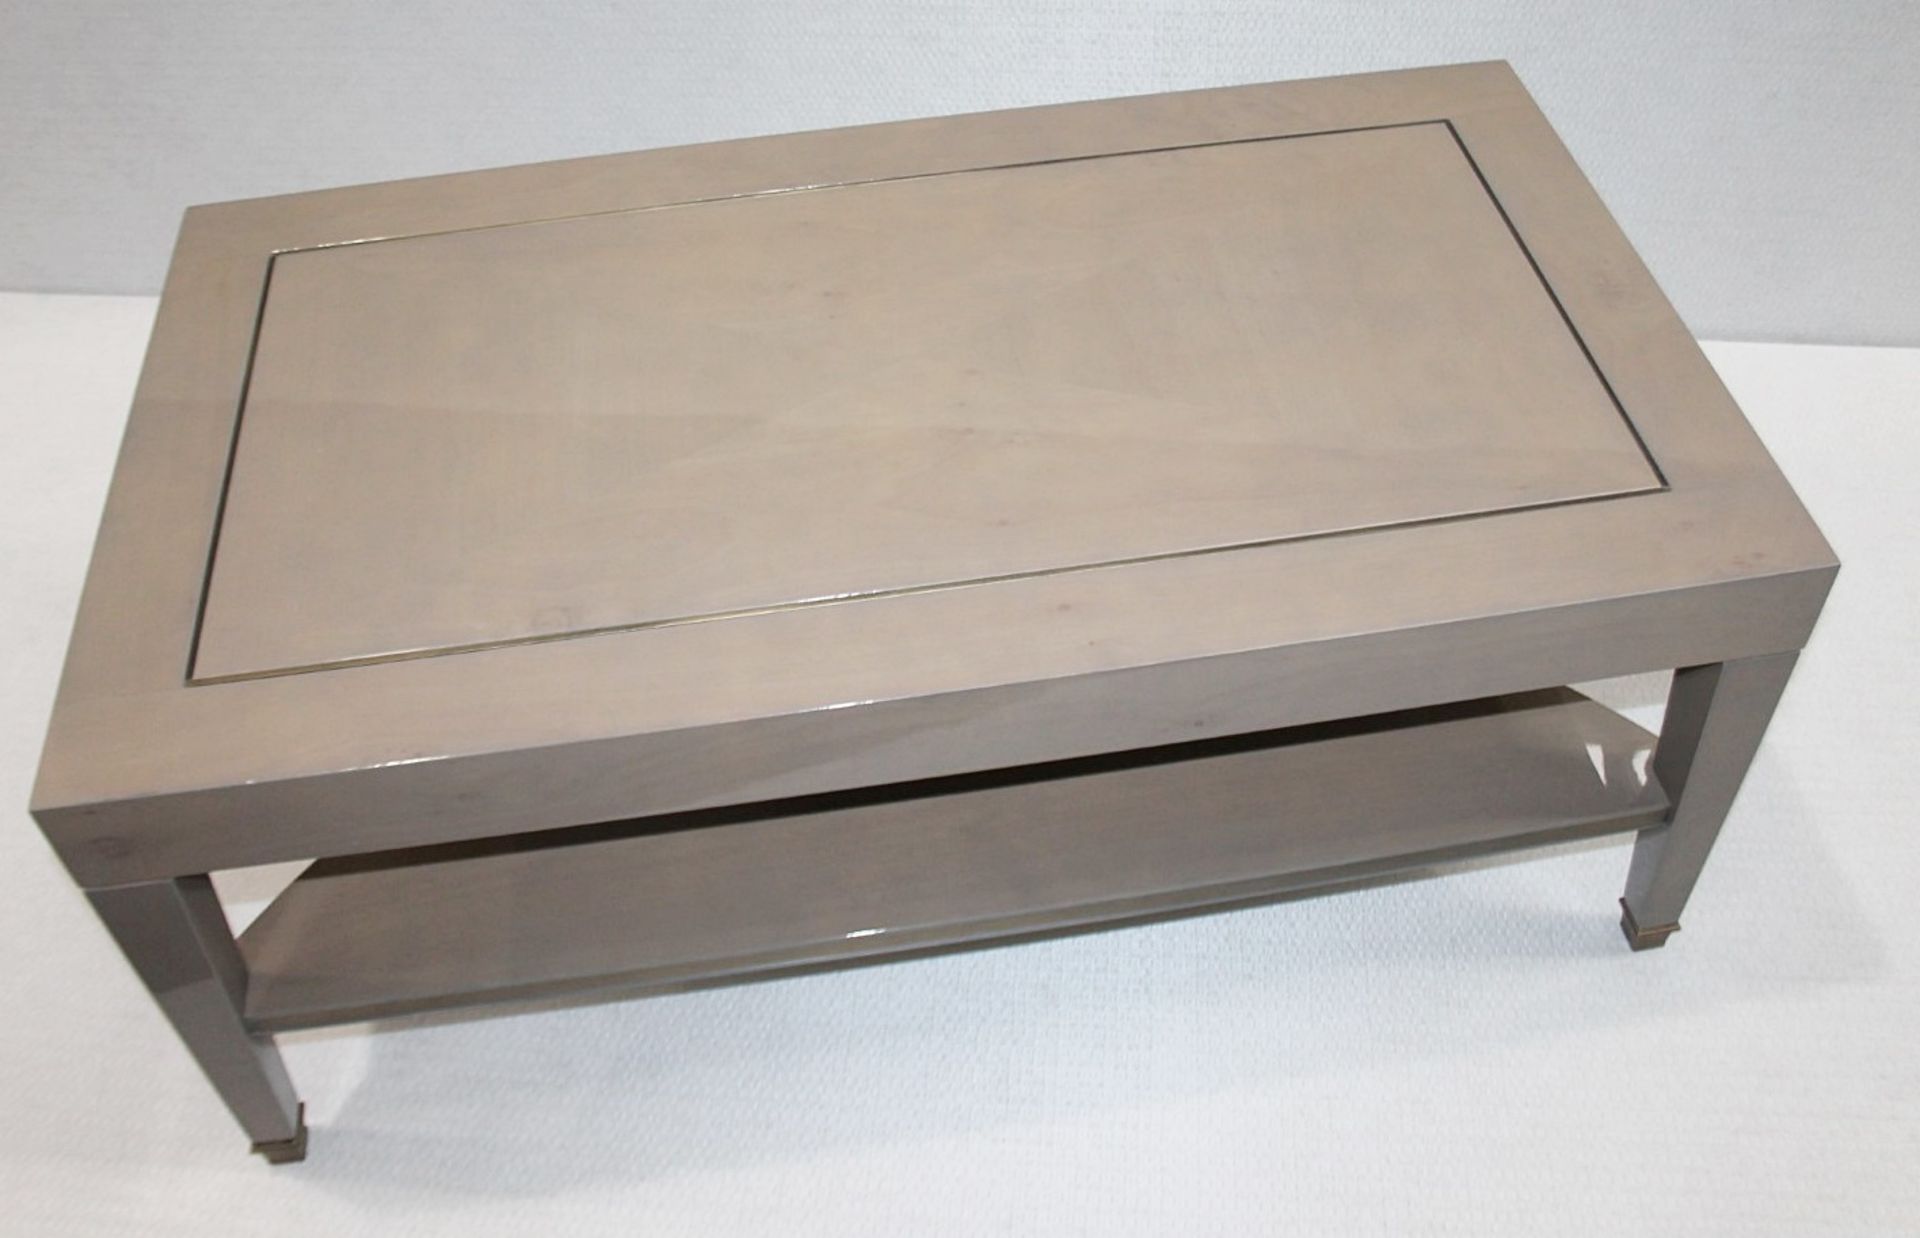 1 x JUSTIN VAN BREDA 'Legacy Alexander' Designer Lacquered Coffee Table With Undershelf - RRP £5,000 - Image 7 of 9